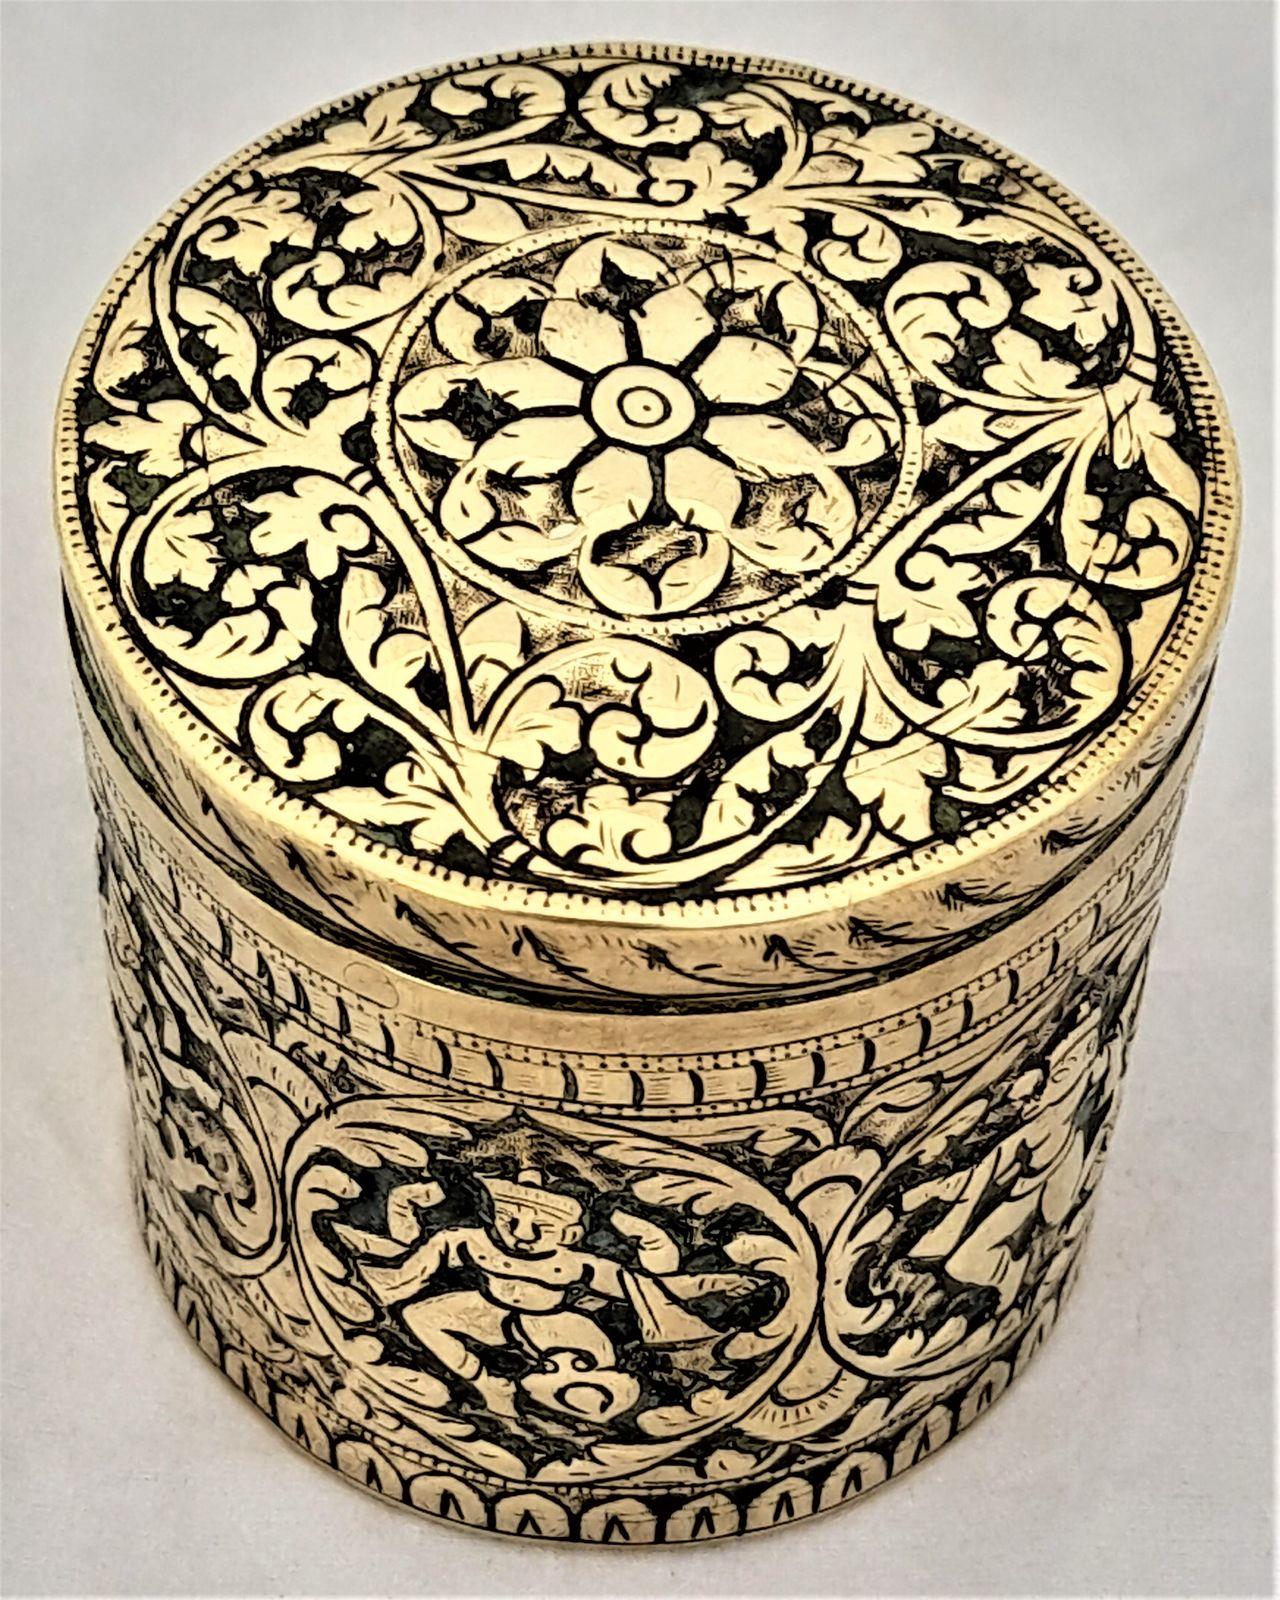 Antique Indian Brass lidded box chased decorated Hindu Vishnu - 19th C - avatars Matsya Kurma Varaha Narasimha British Raj cylindrical spice 6.8 cm H